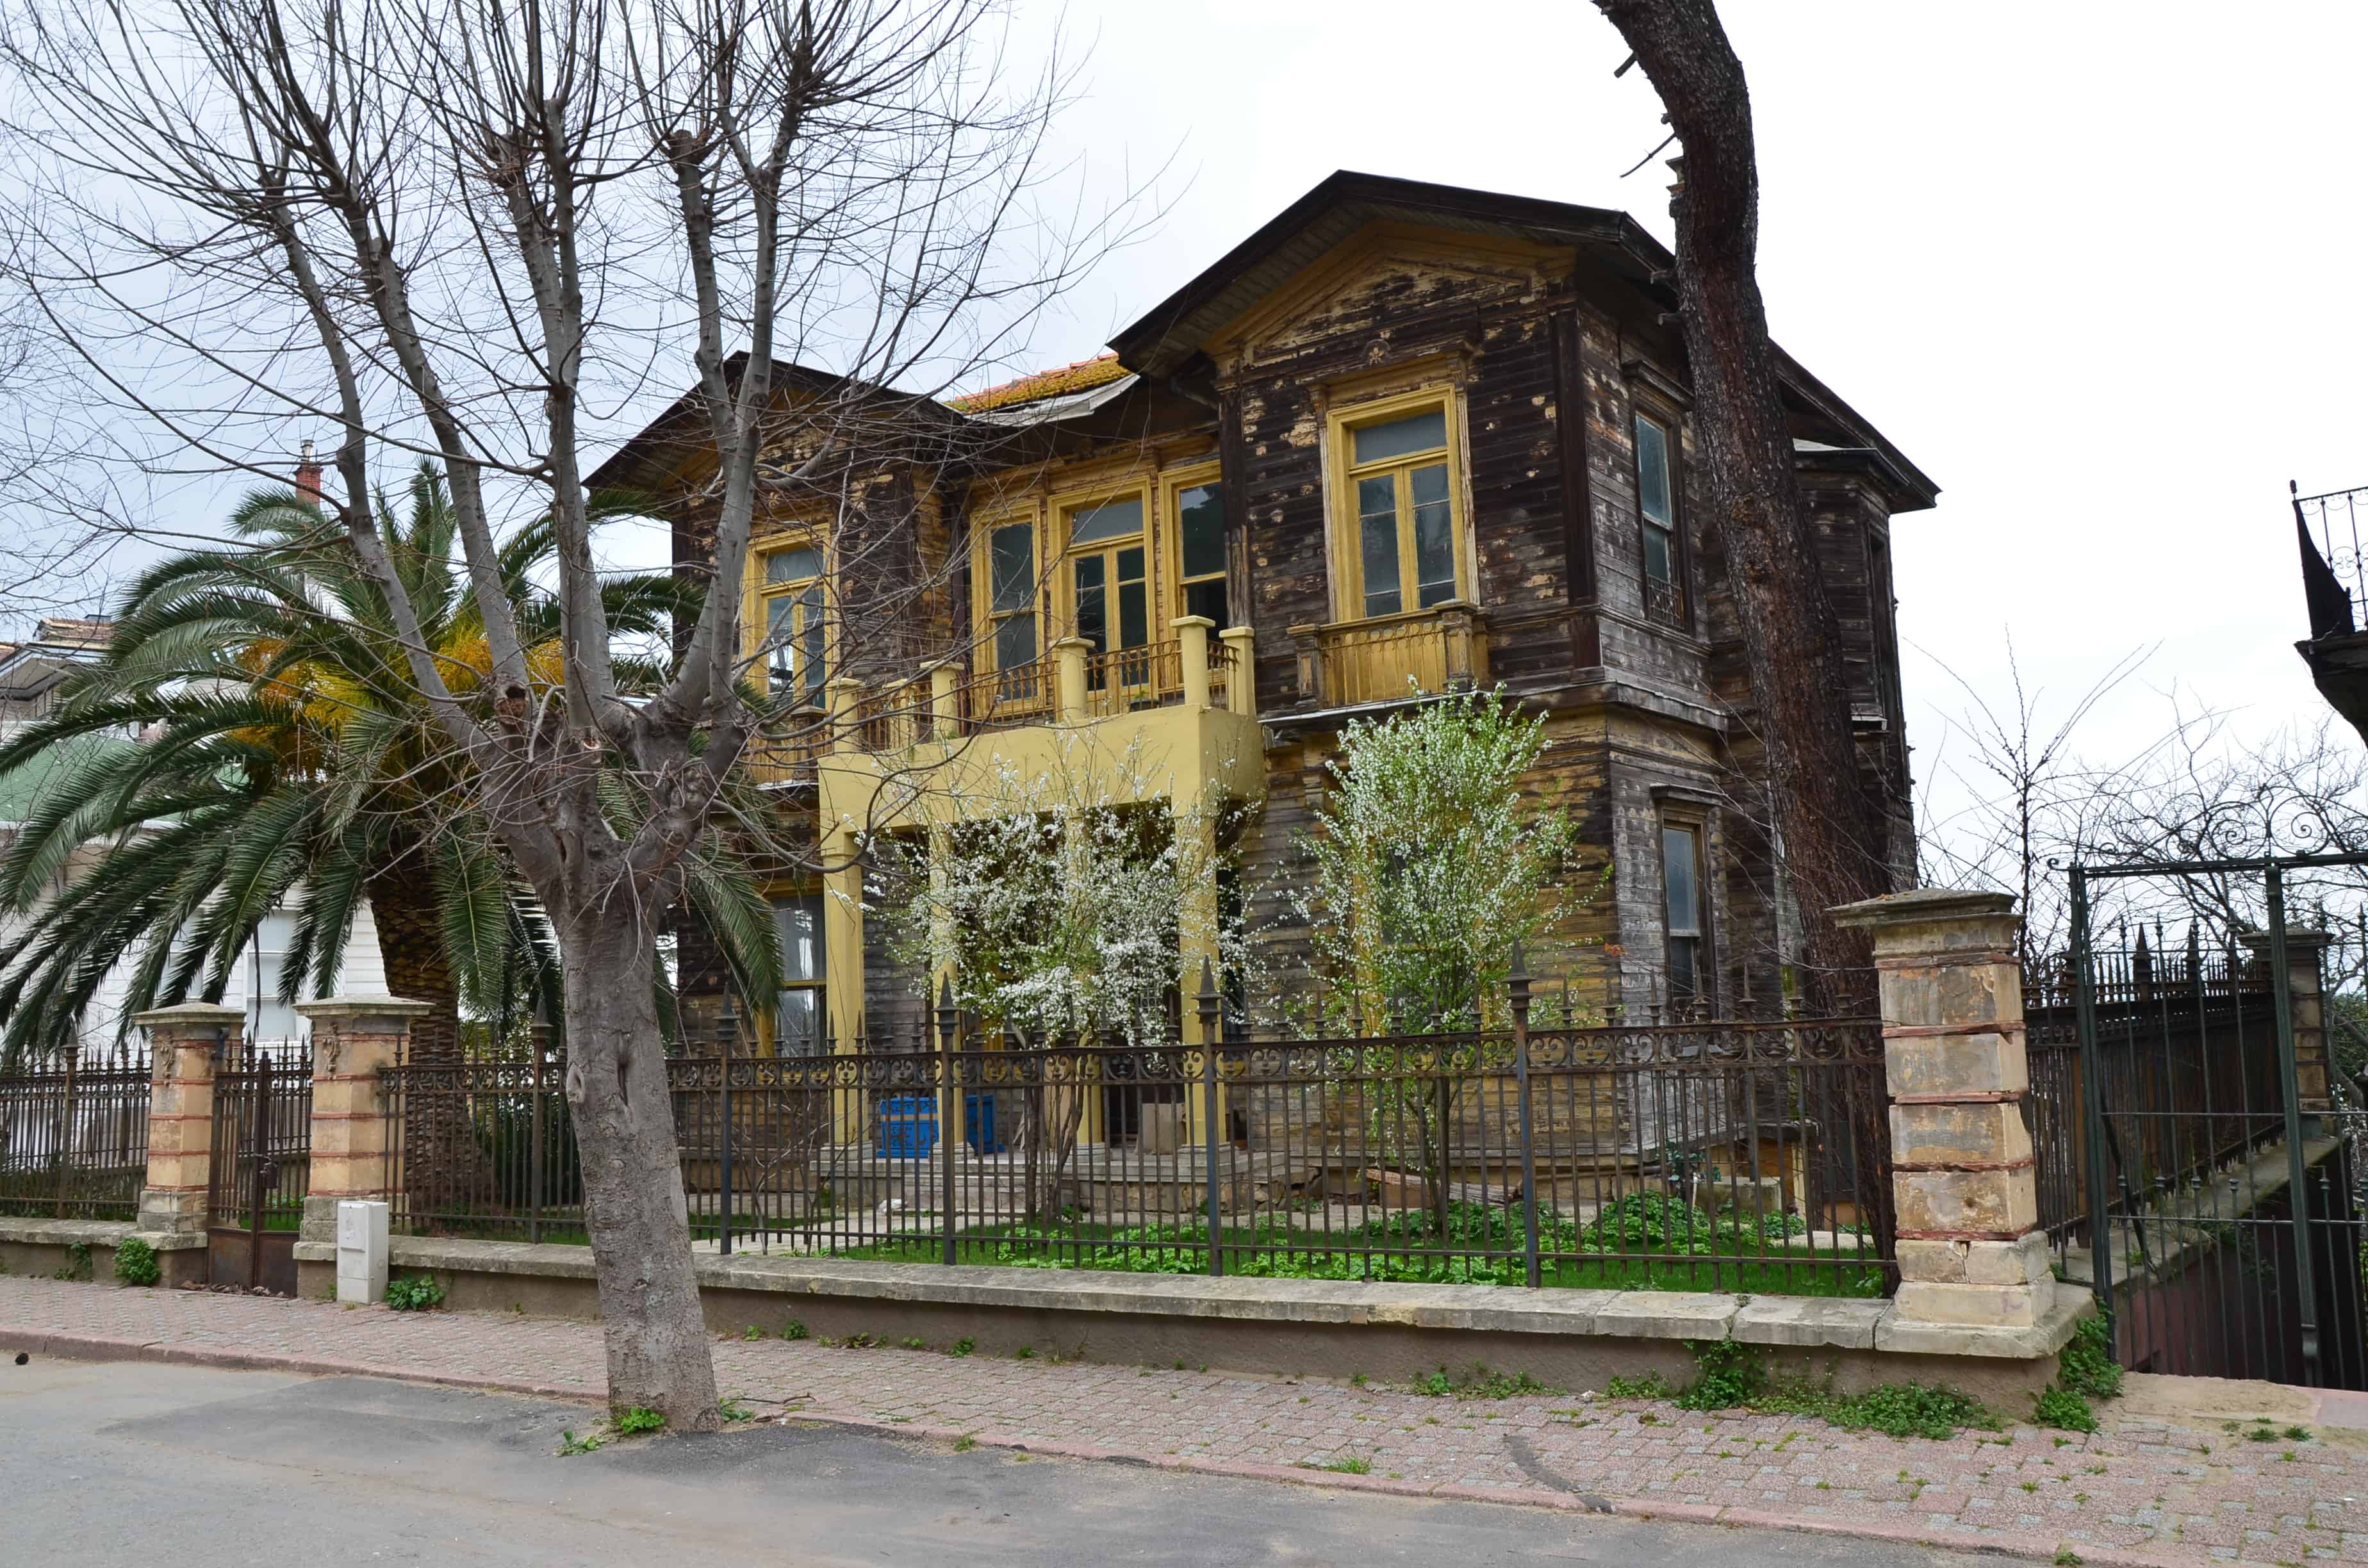 Ottoman home on Refah Şehitleri Caddesi on Heybeliada, Princes' Islands, Istanbul, Turkey